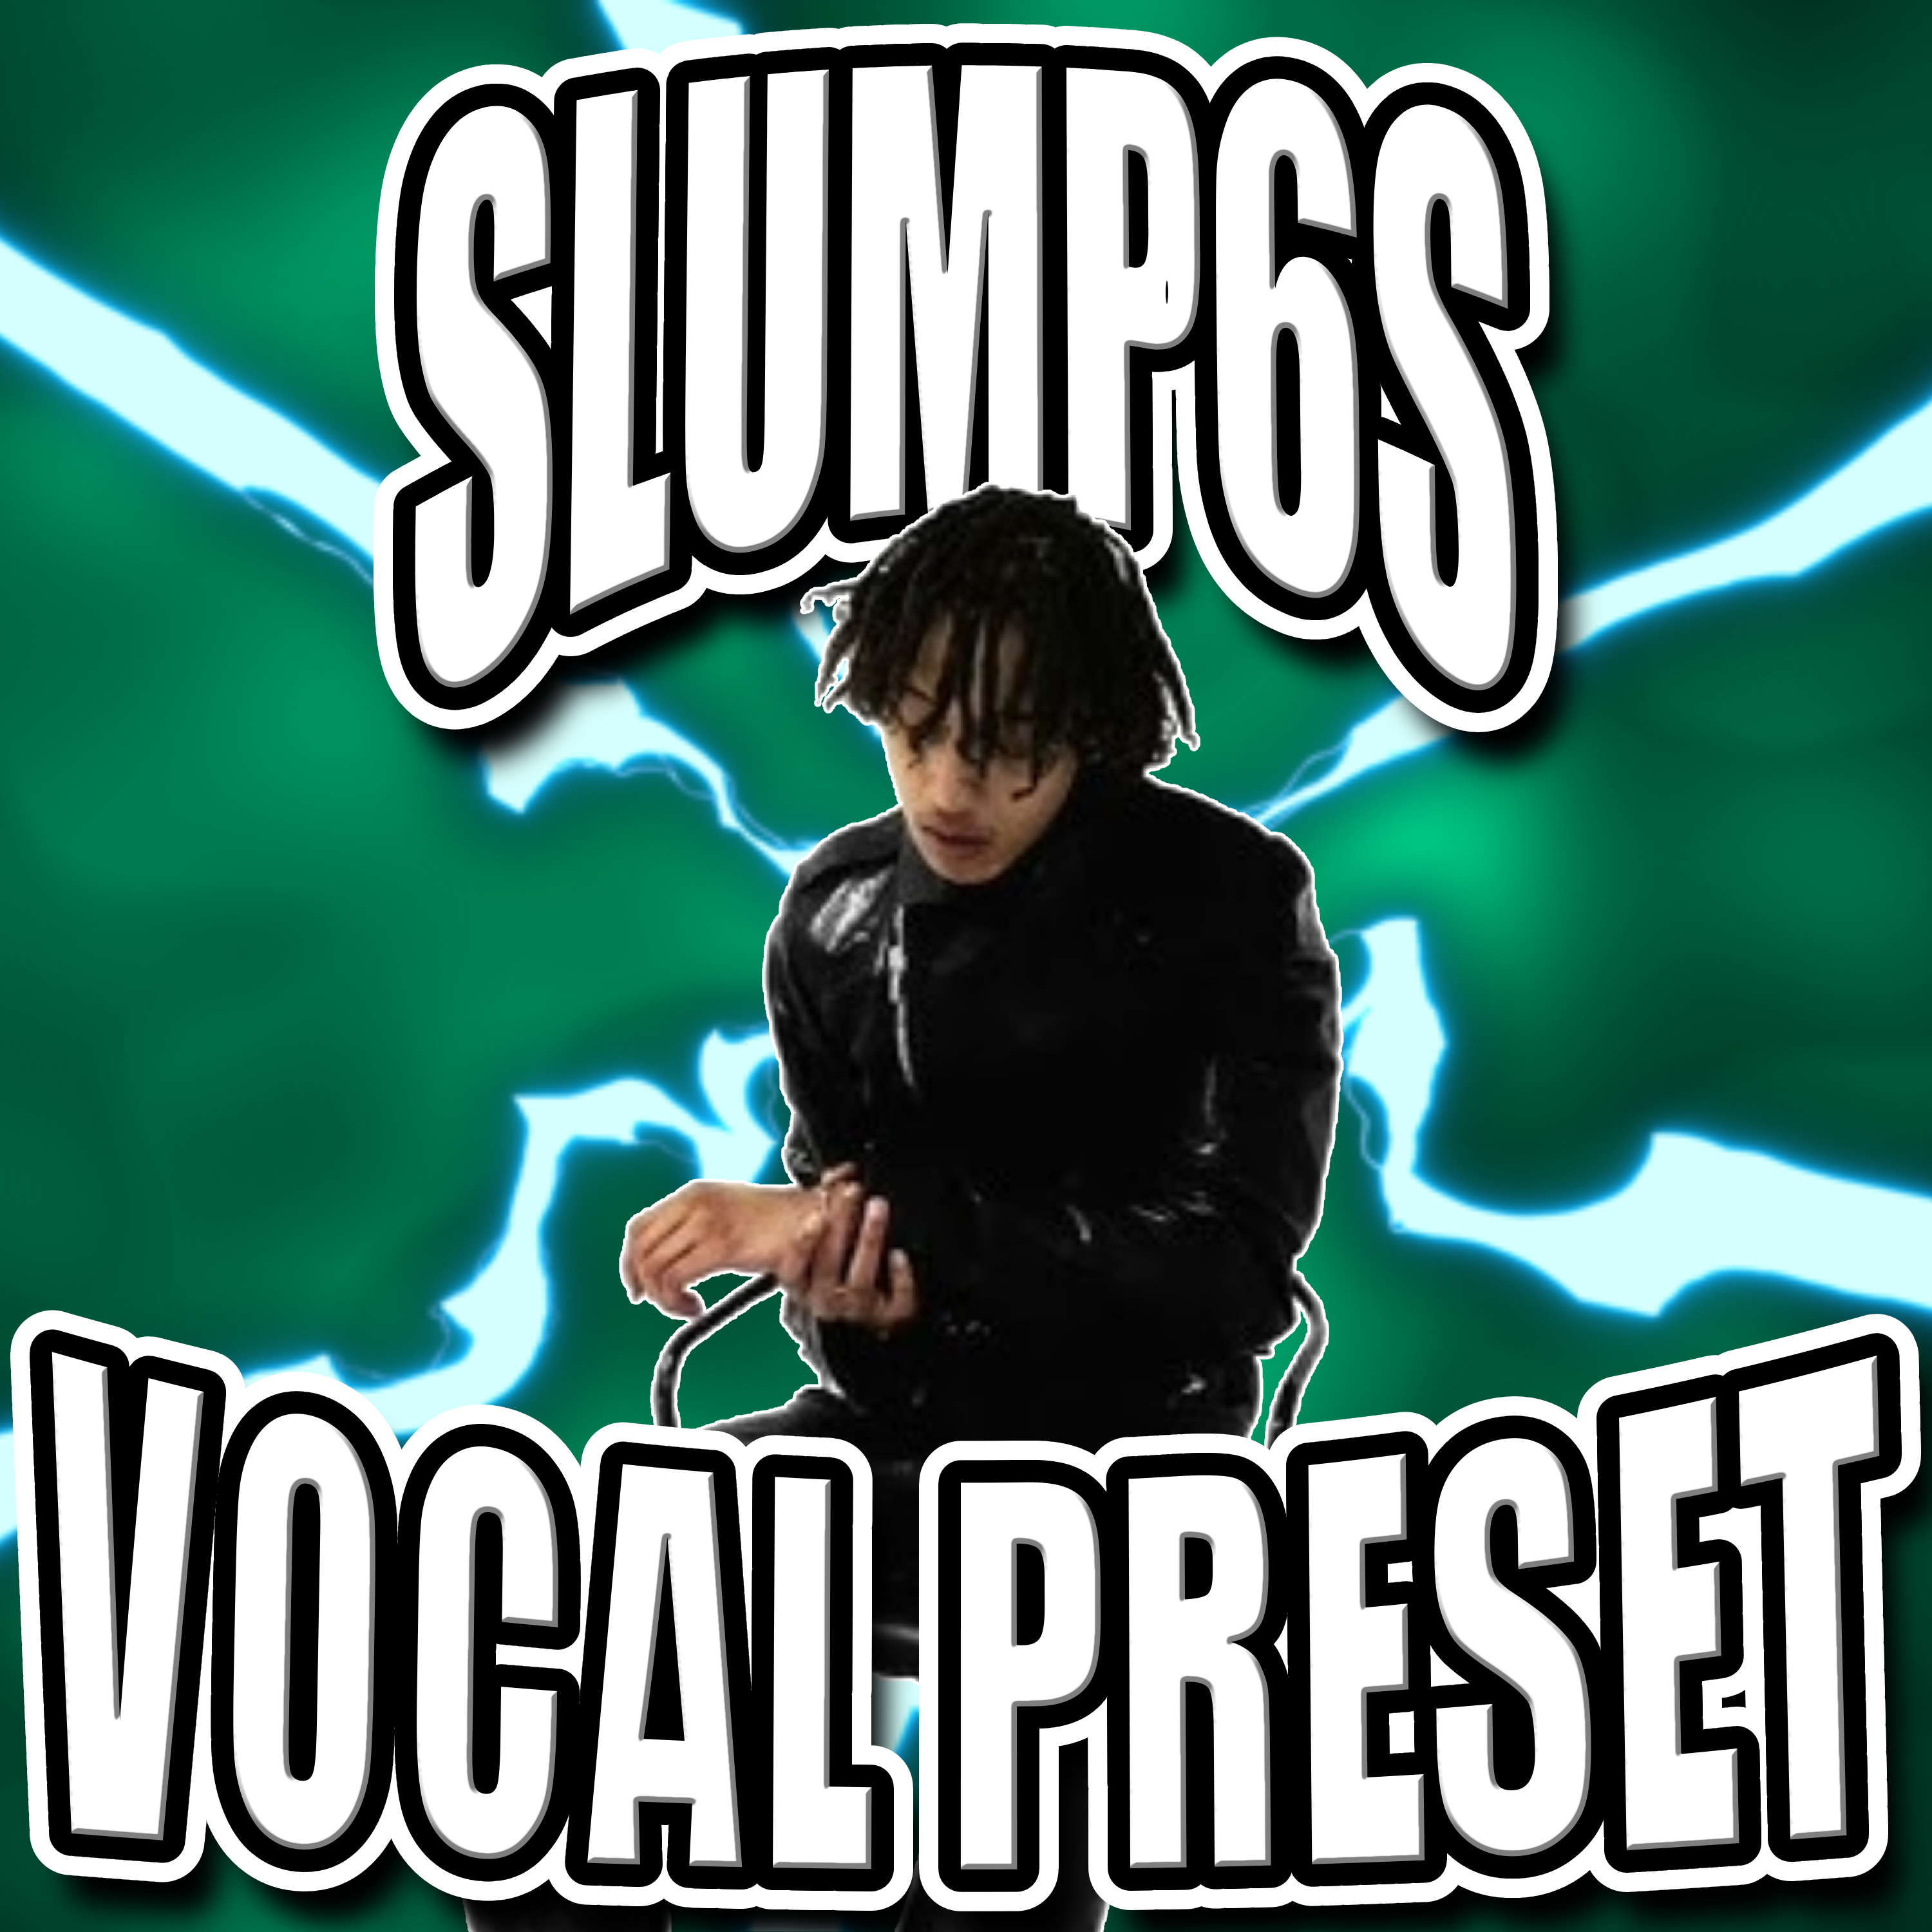 The Slump6s Vocal Preset